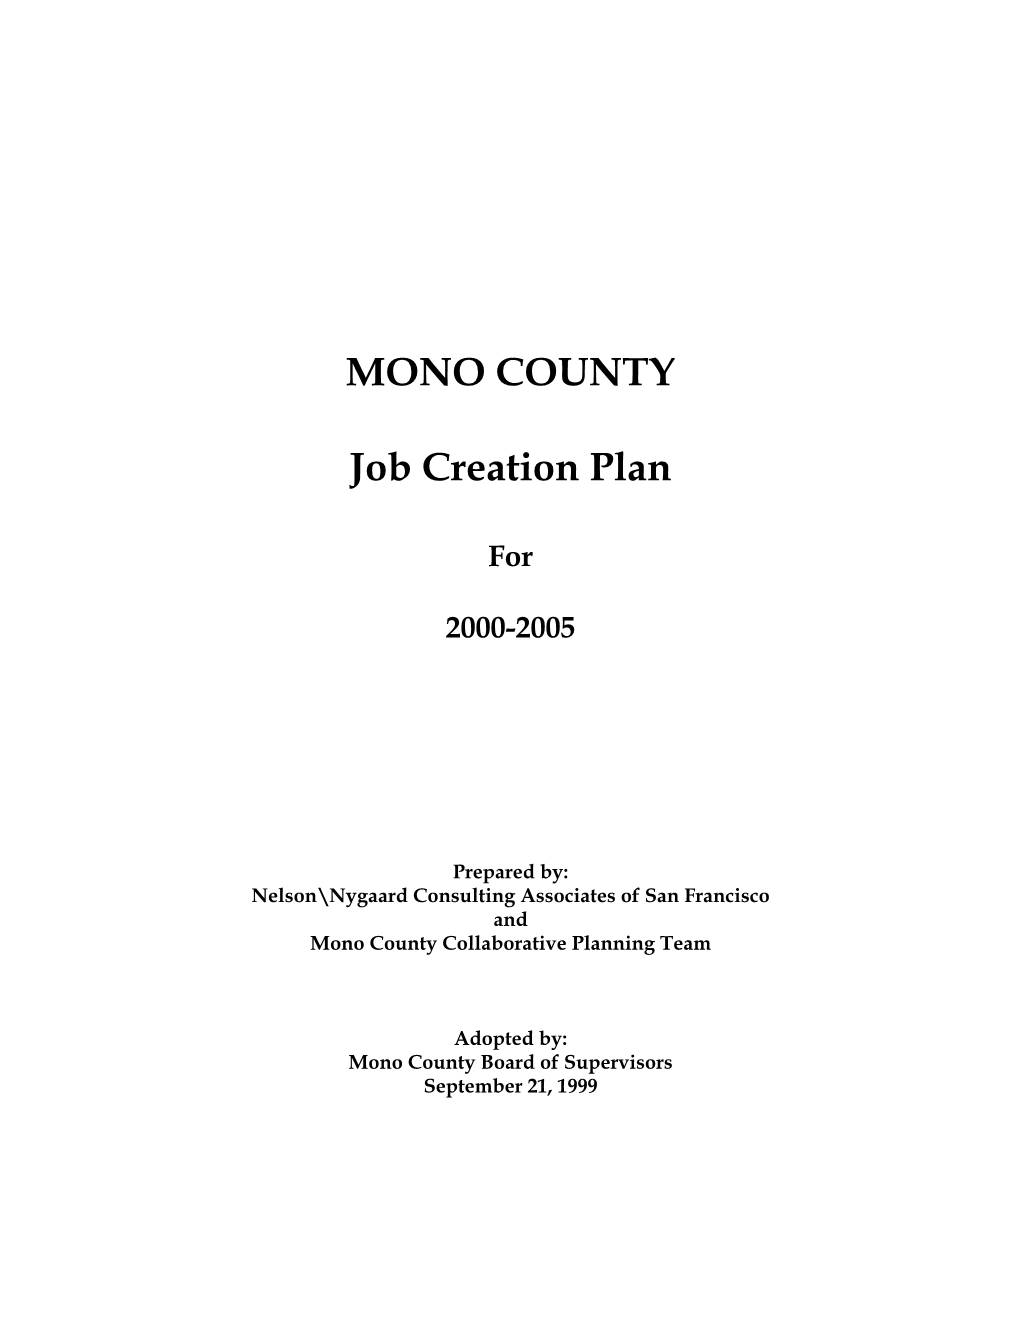 Mono County Job Creation Plan